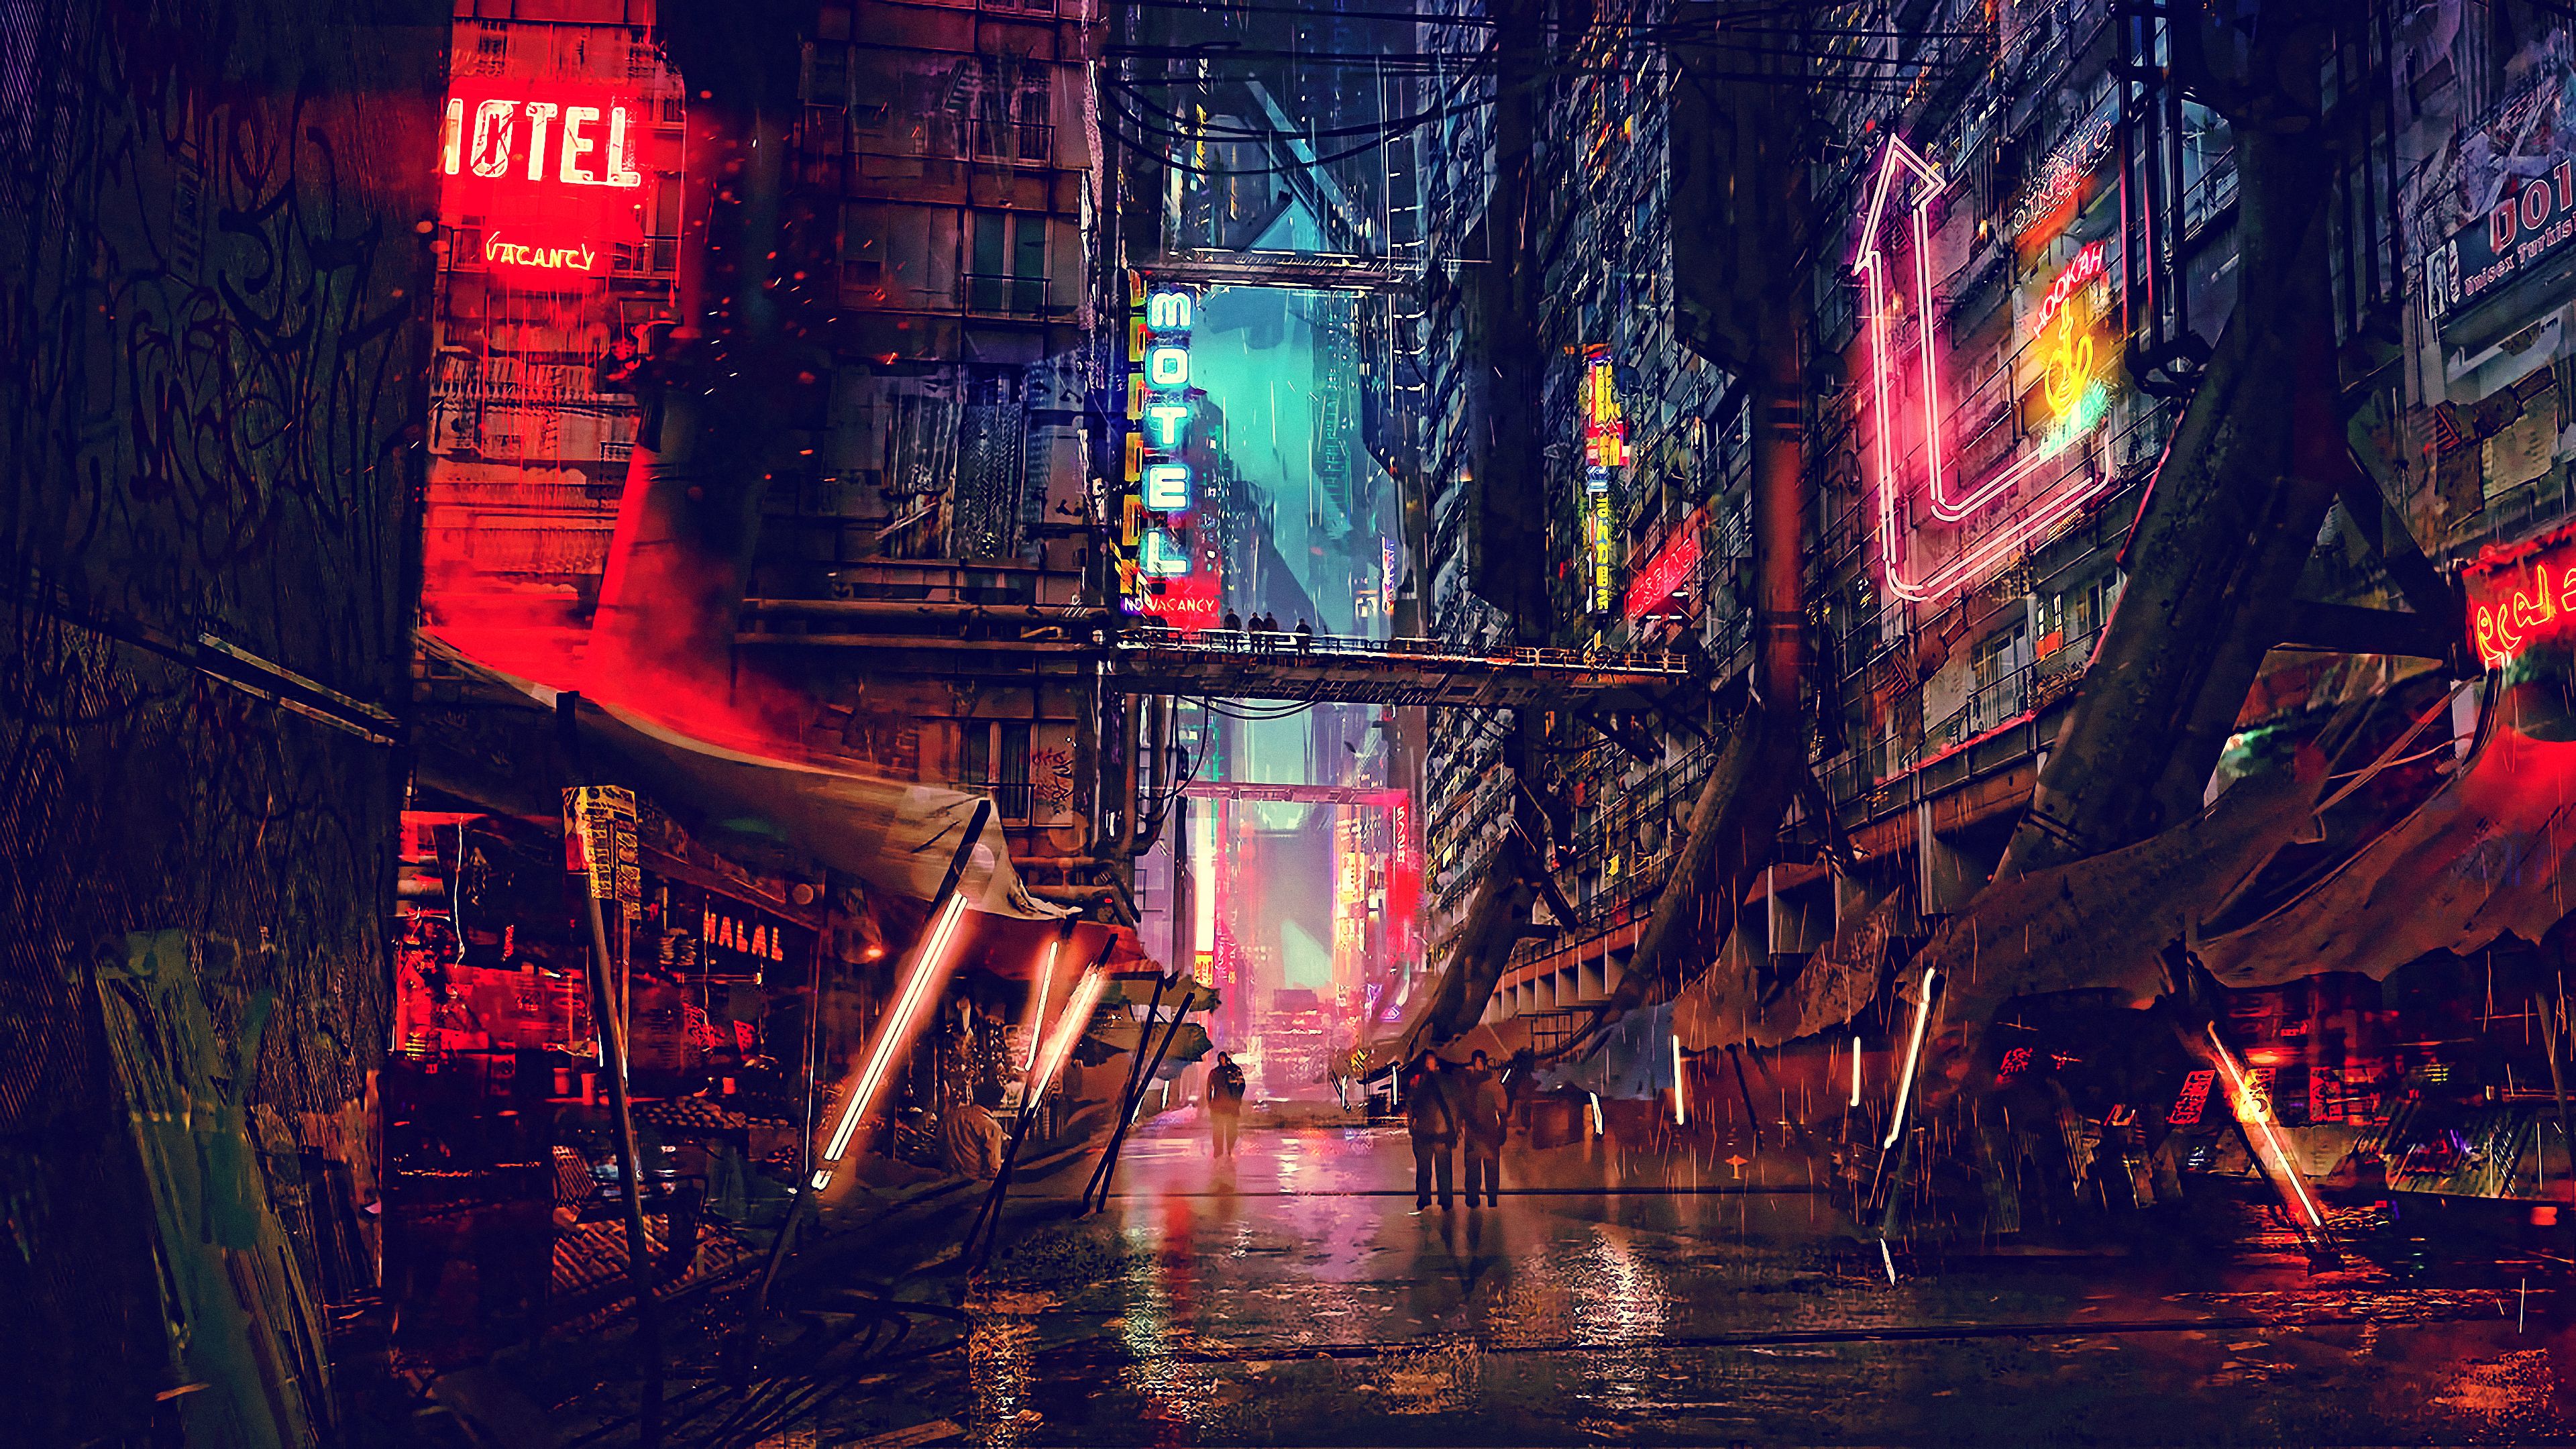 Science Fiction Cyberpunk Futuristic City Digital Art 4k, HD Artist, 4k Wallpaper, Image, Background, Photo and Picture